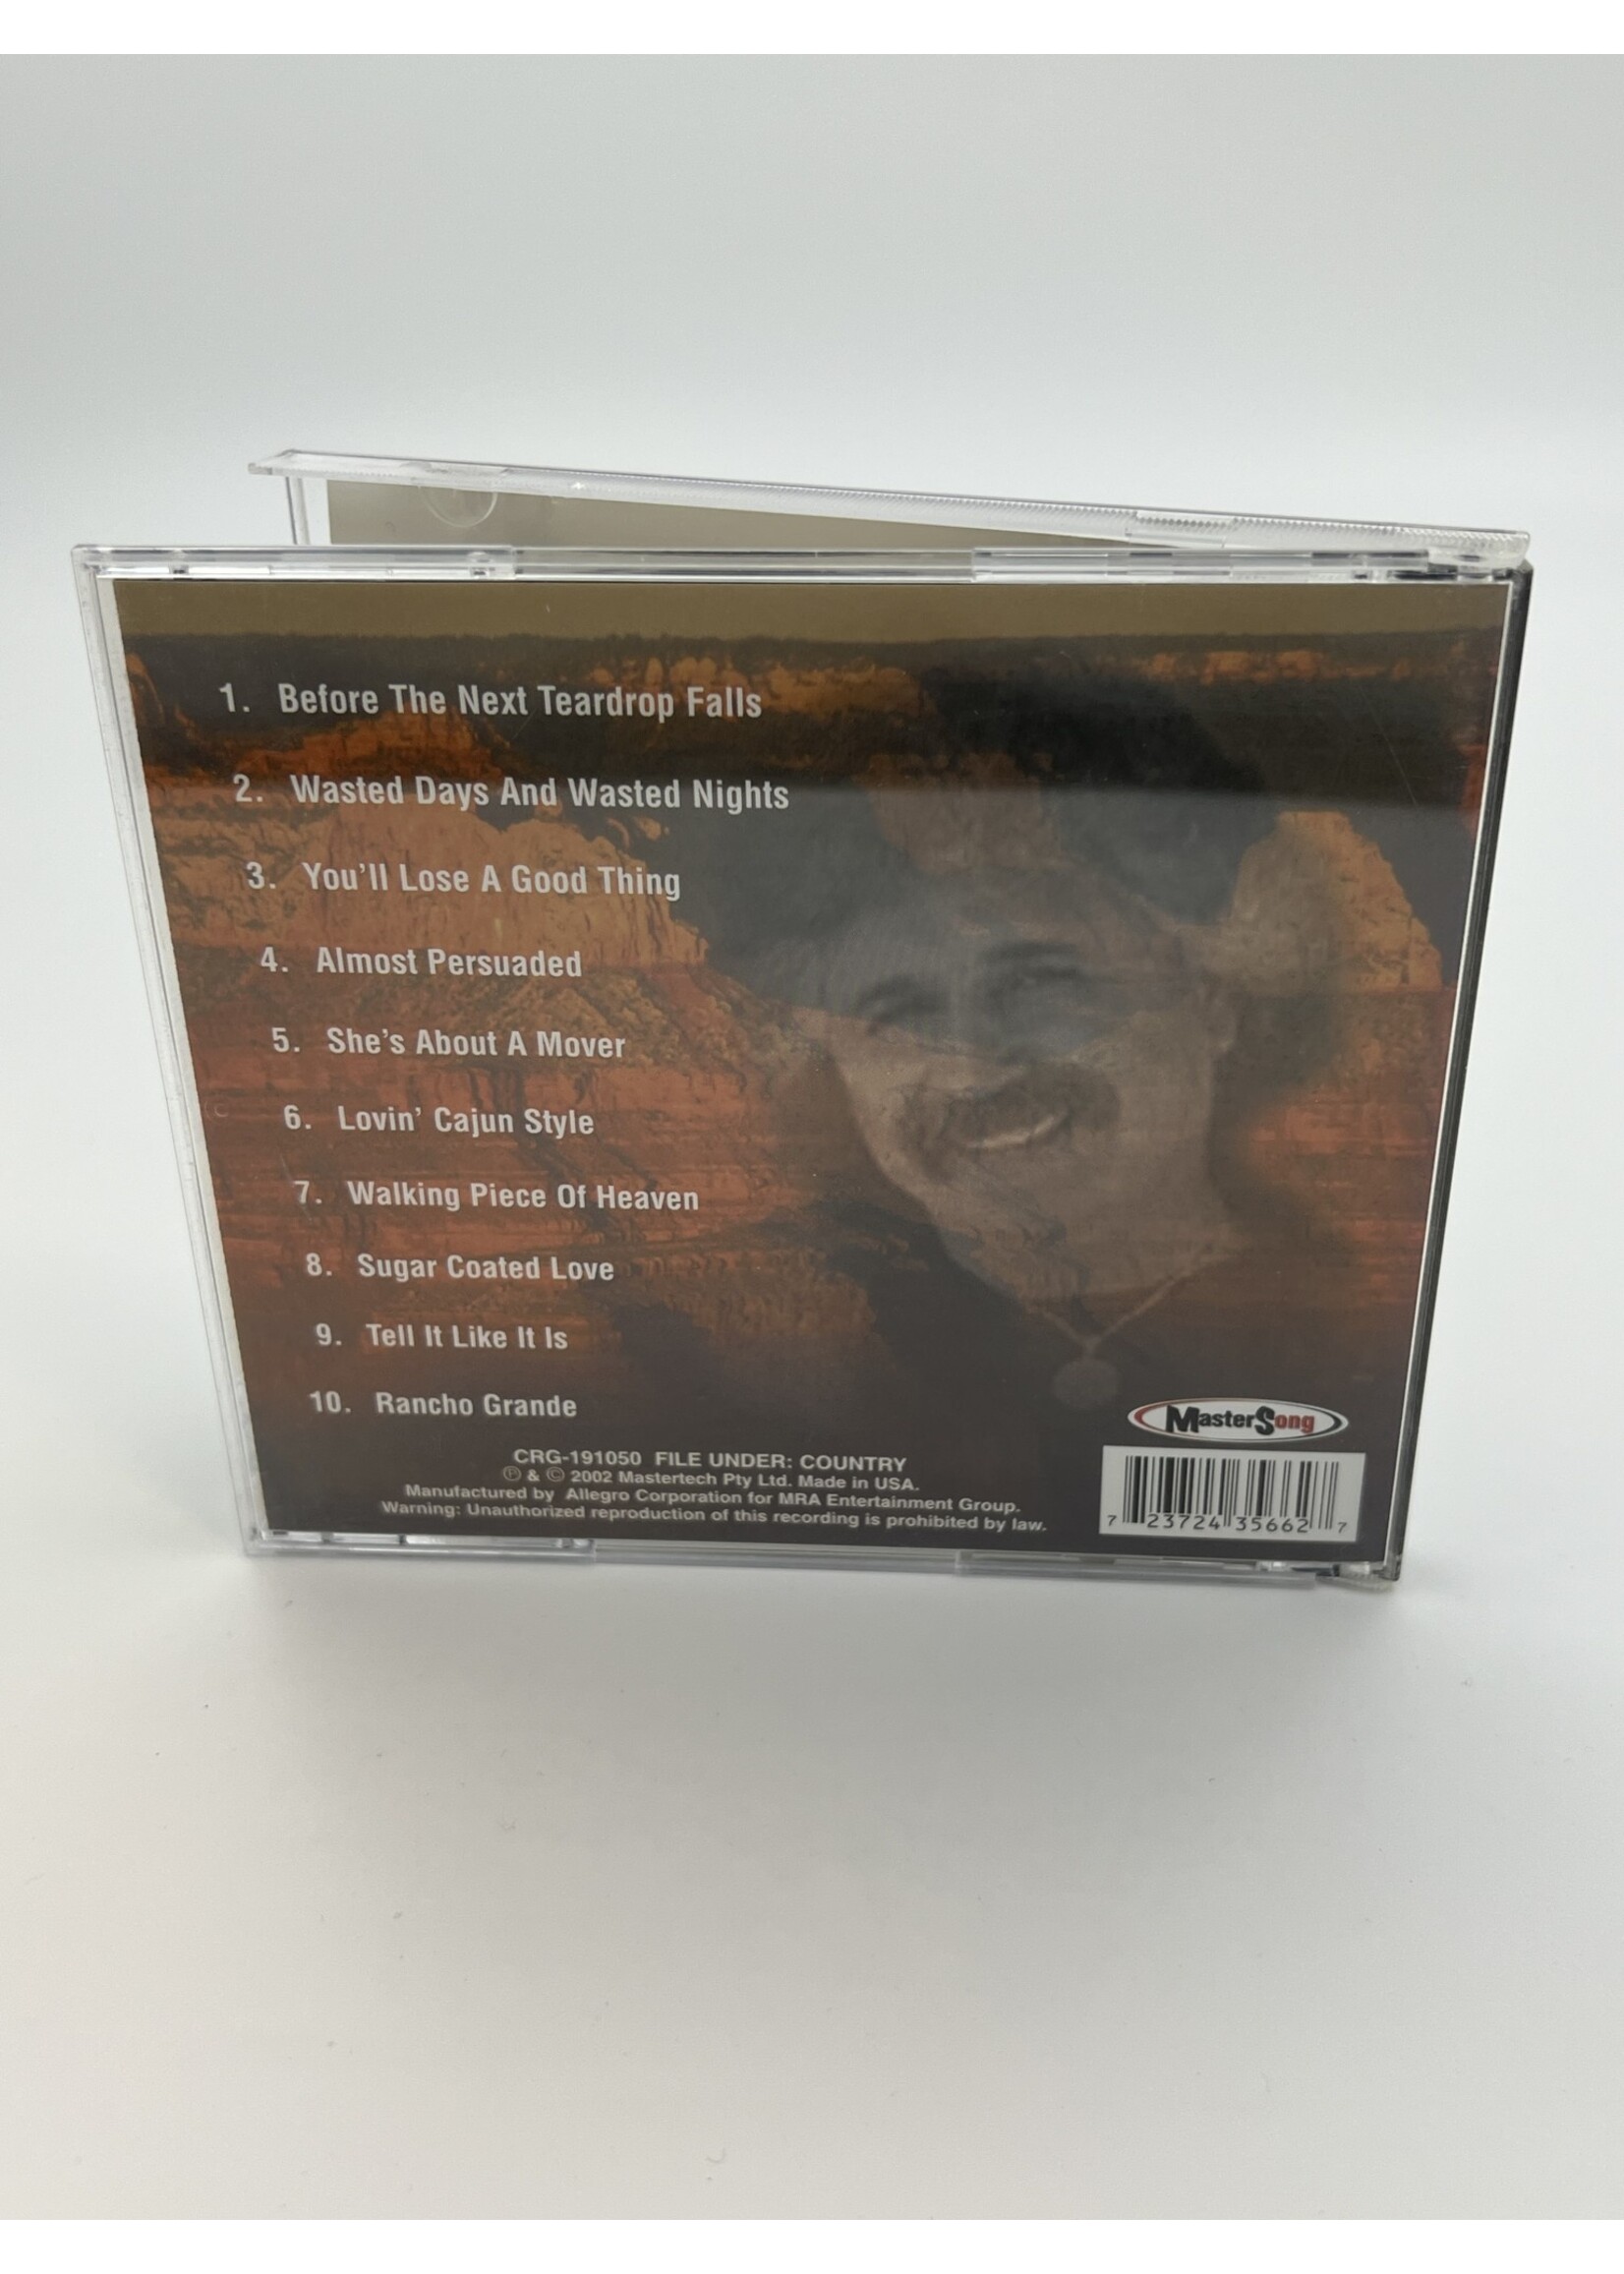 CD Freddy Fender Greatest Hits CD